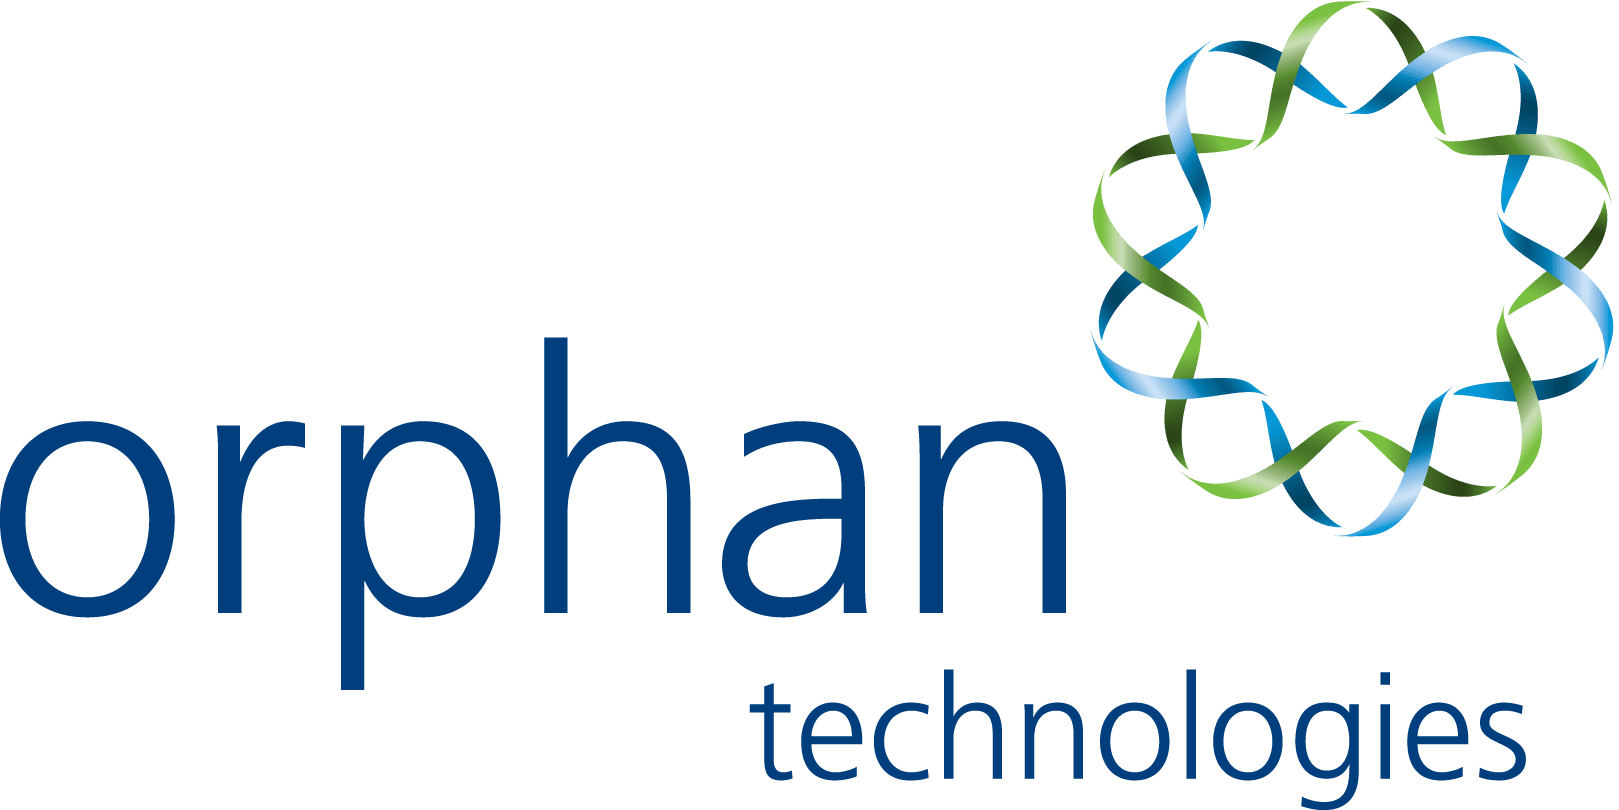 Logo of Orphan Technologies